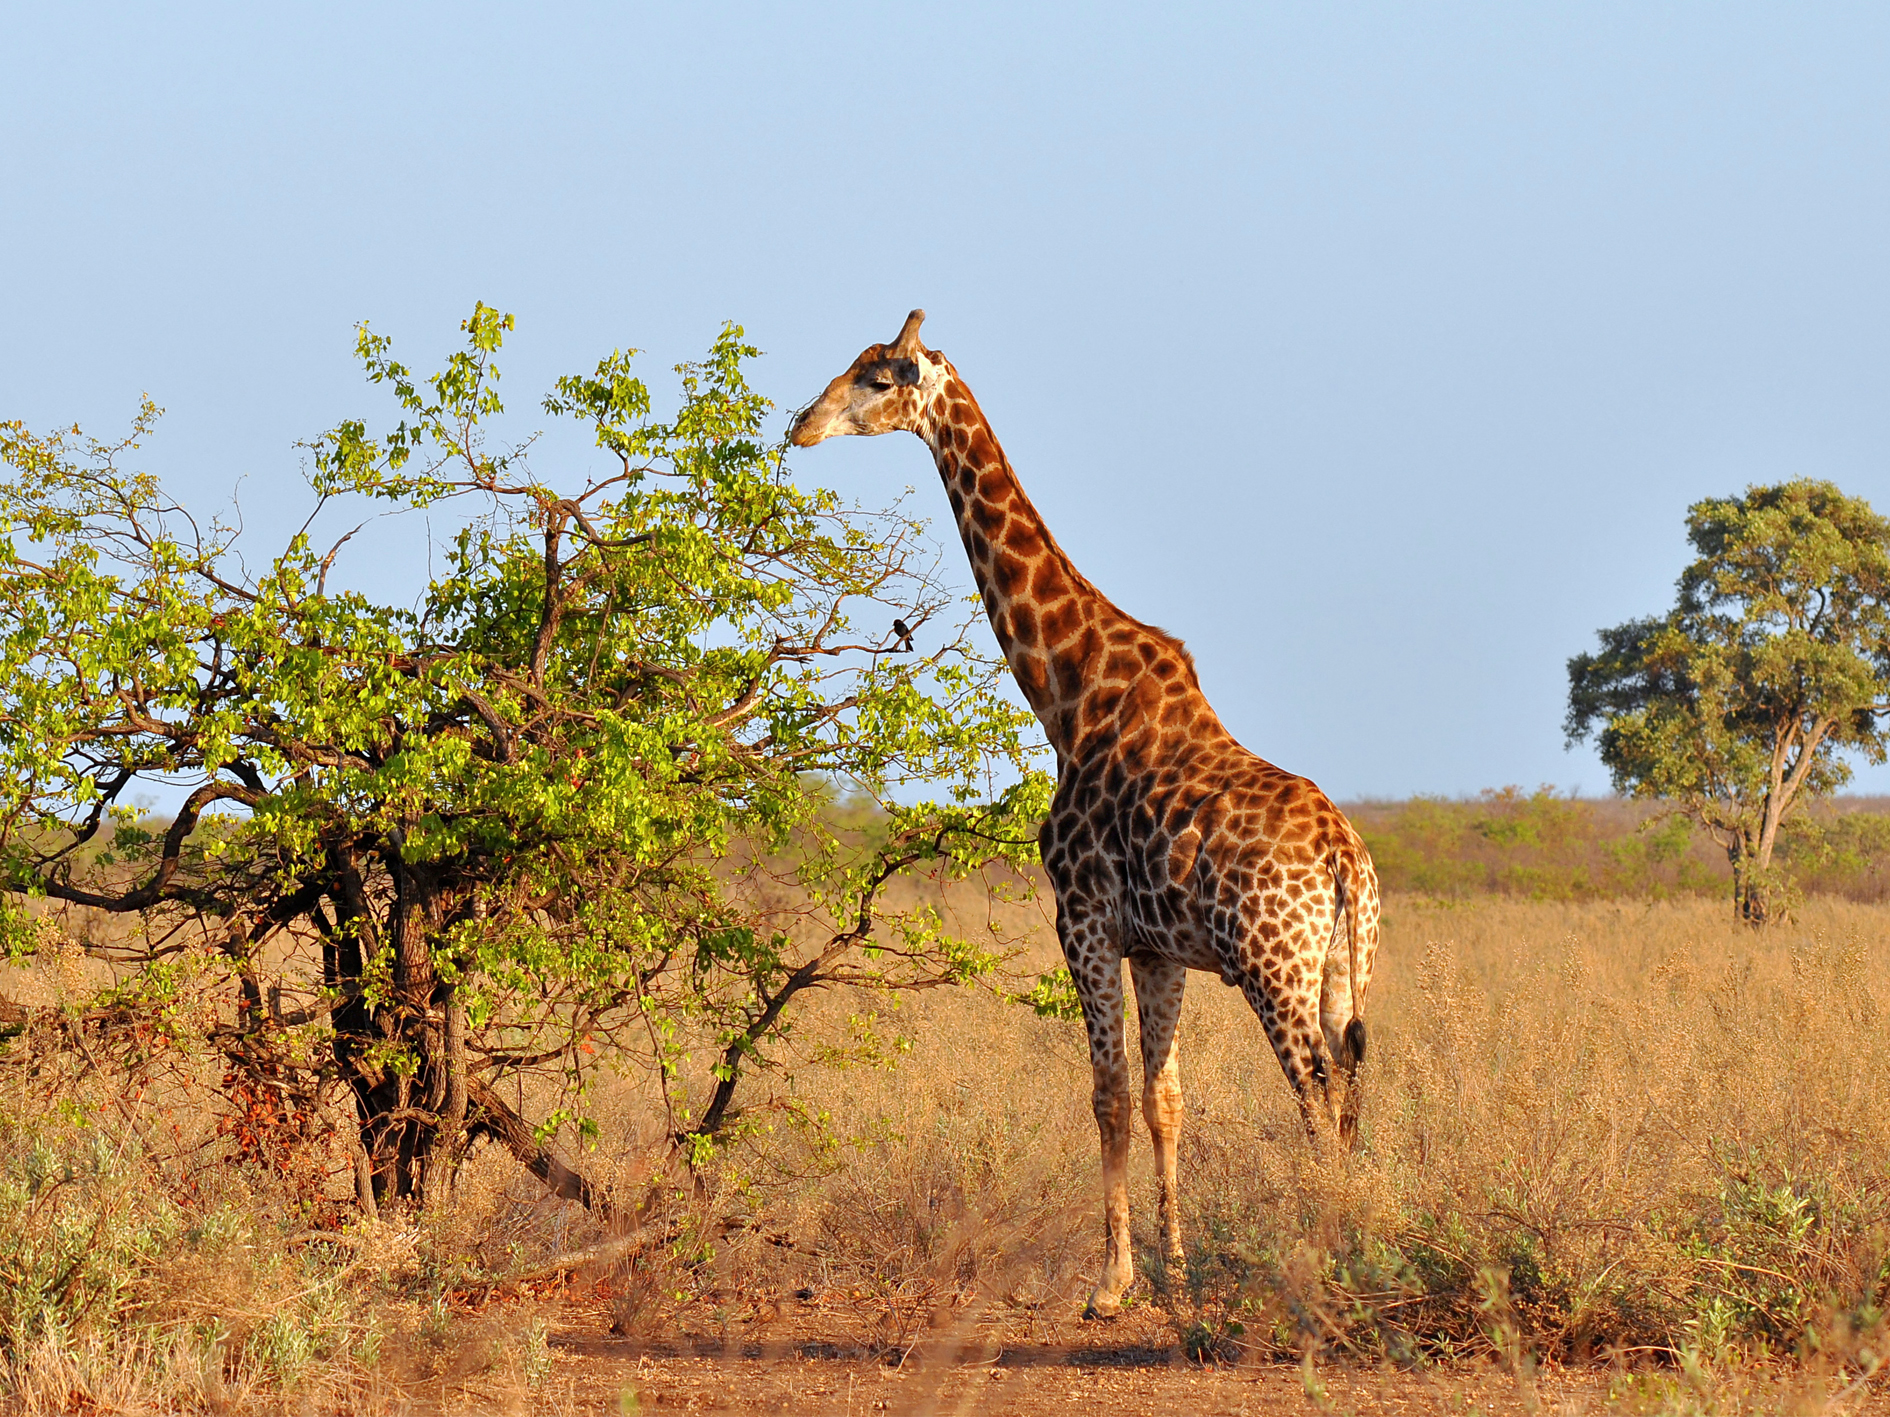 Day 5 - Safari in the Mara